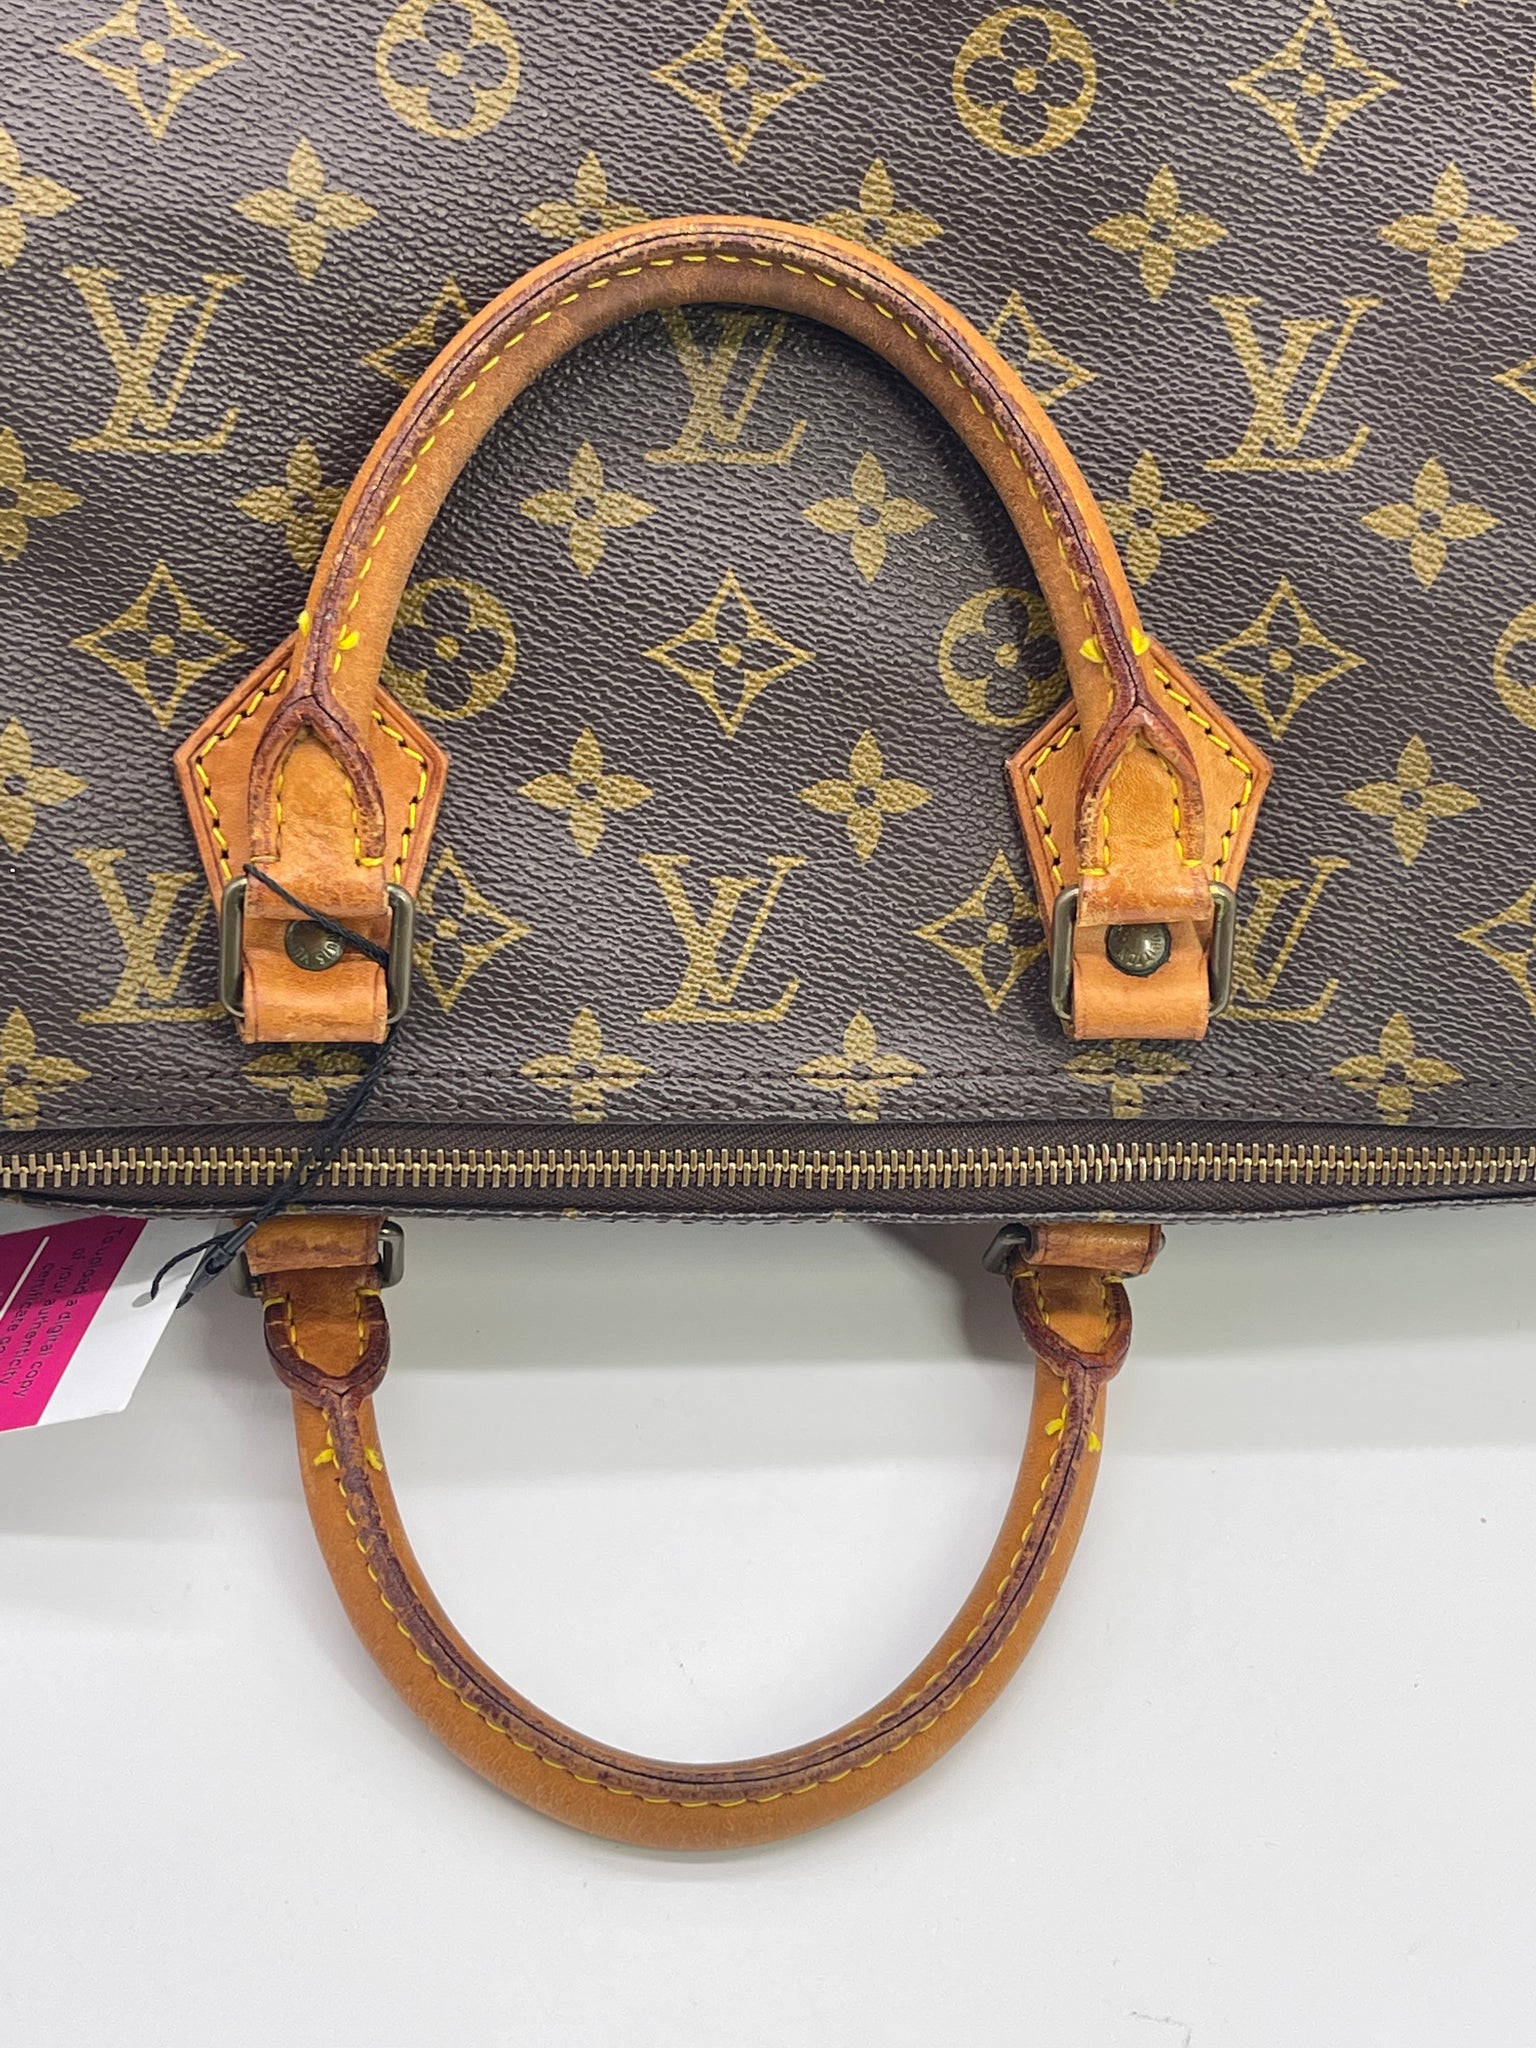 PRELOVED Louis Vuitton Monogram Speedy 40 Bag VI881 090722